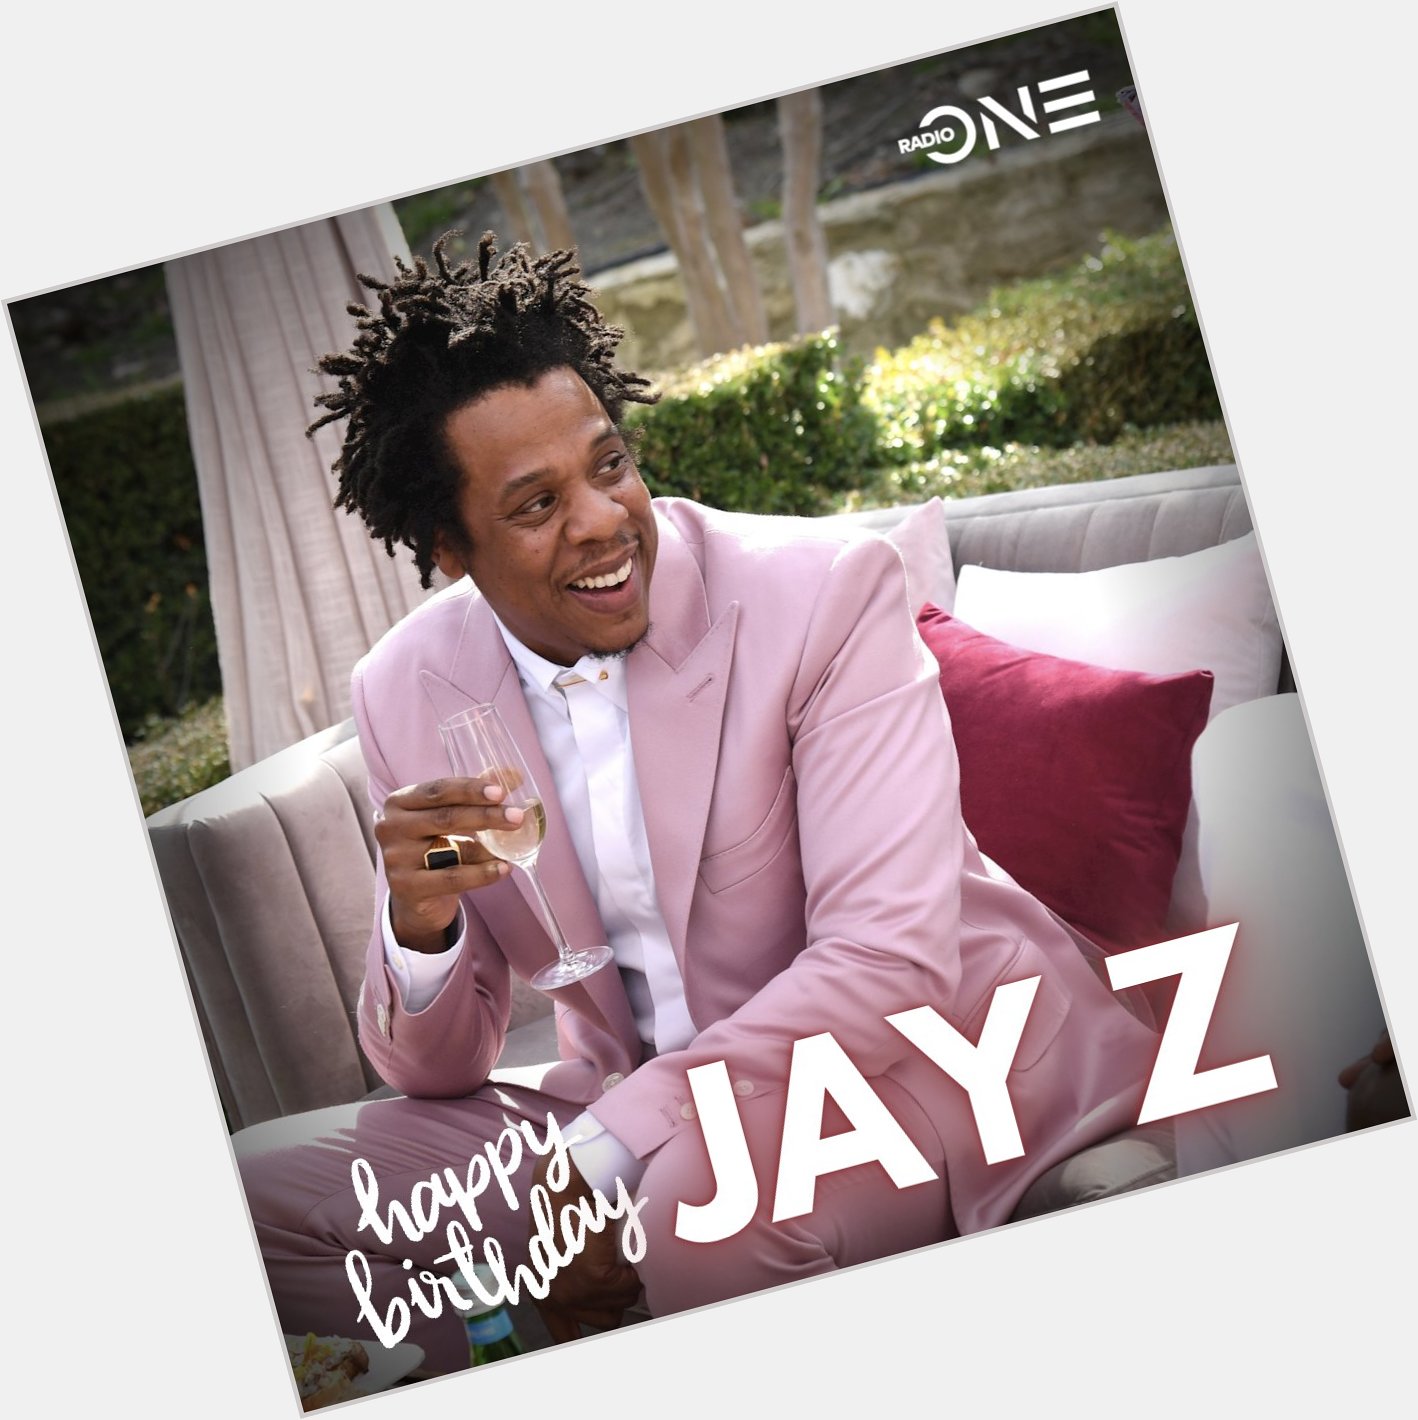 Wishing the Jay Z a happy 51st birthday 